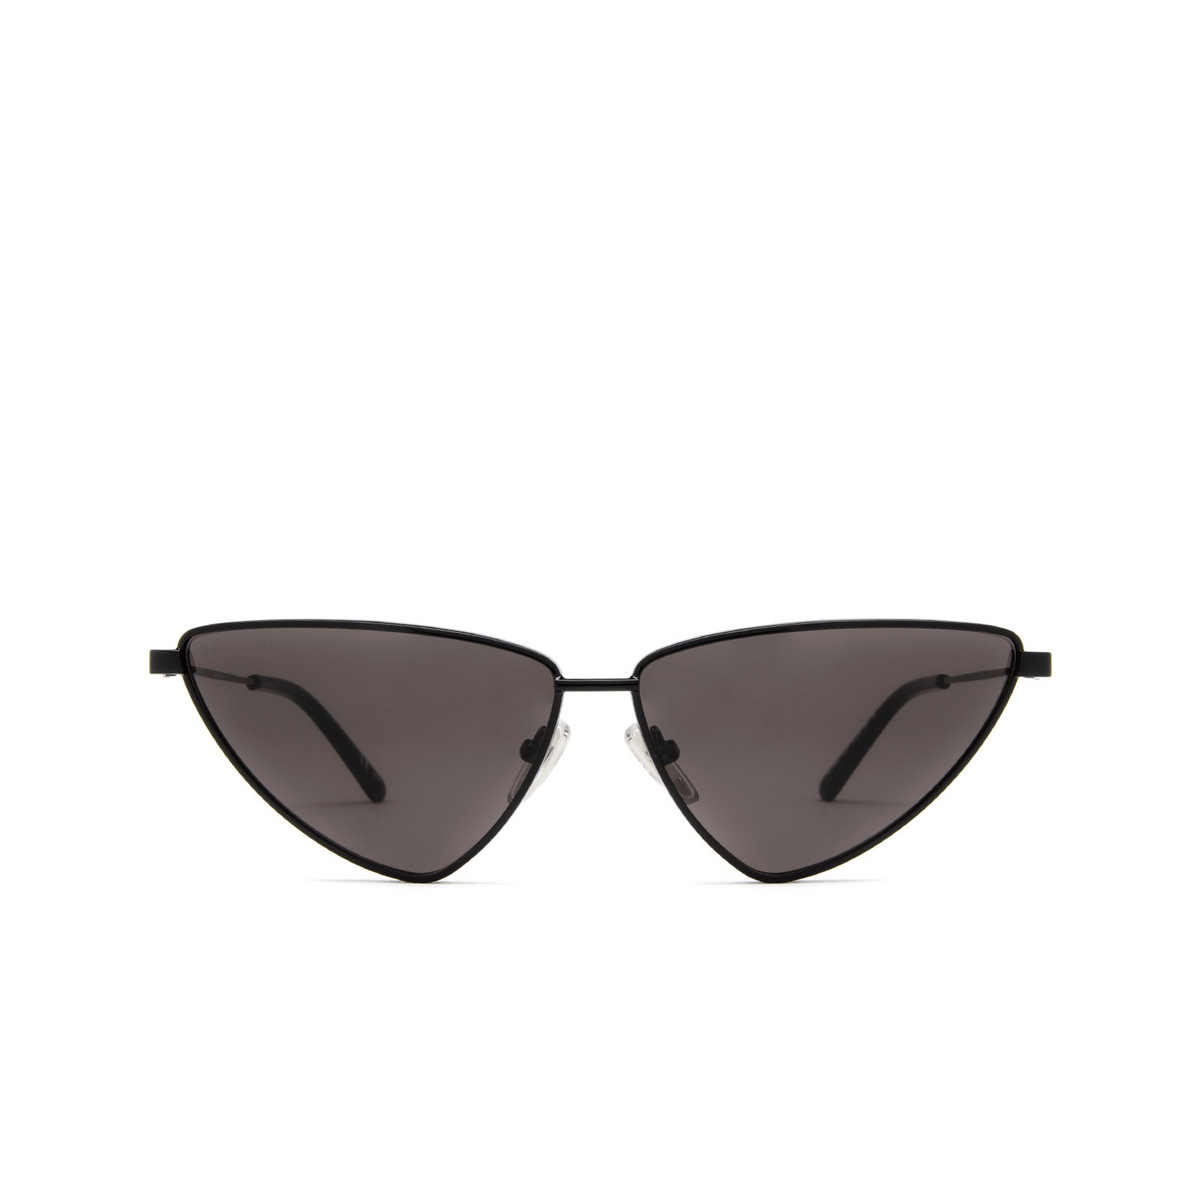 Balenciaga® Cat-eye Sunglasses: BB0193S color Black 001 - front view.